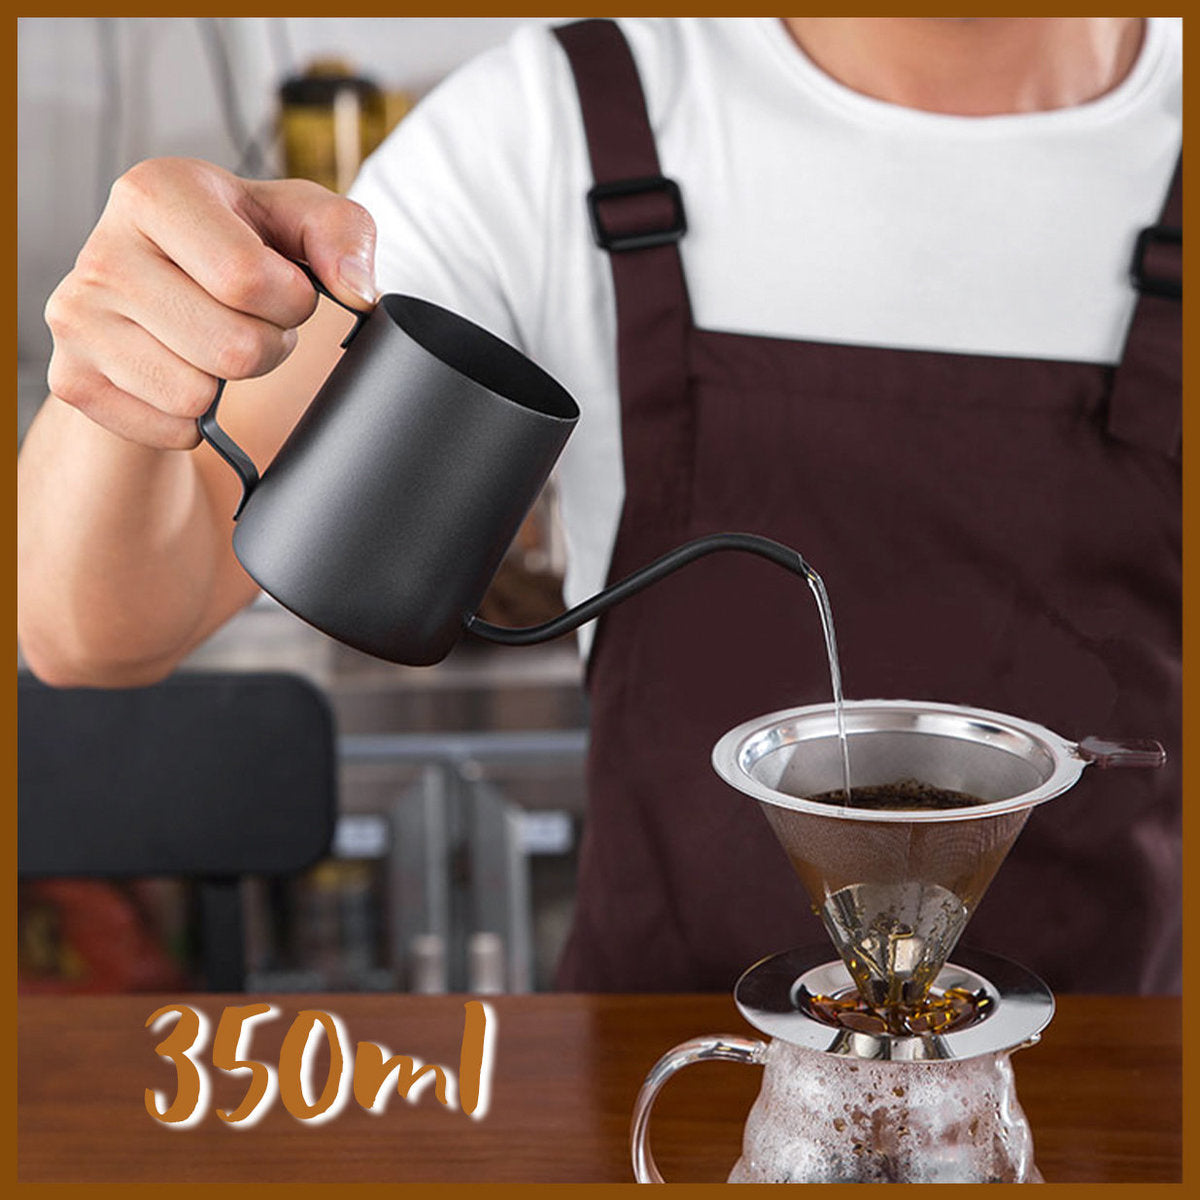 350mL 長嘴細口手沖咖啡壼 304食品級不銹鋼 容量350mL 黑色 咖啡壺